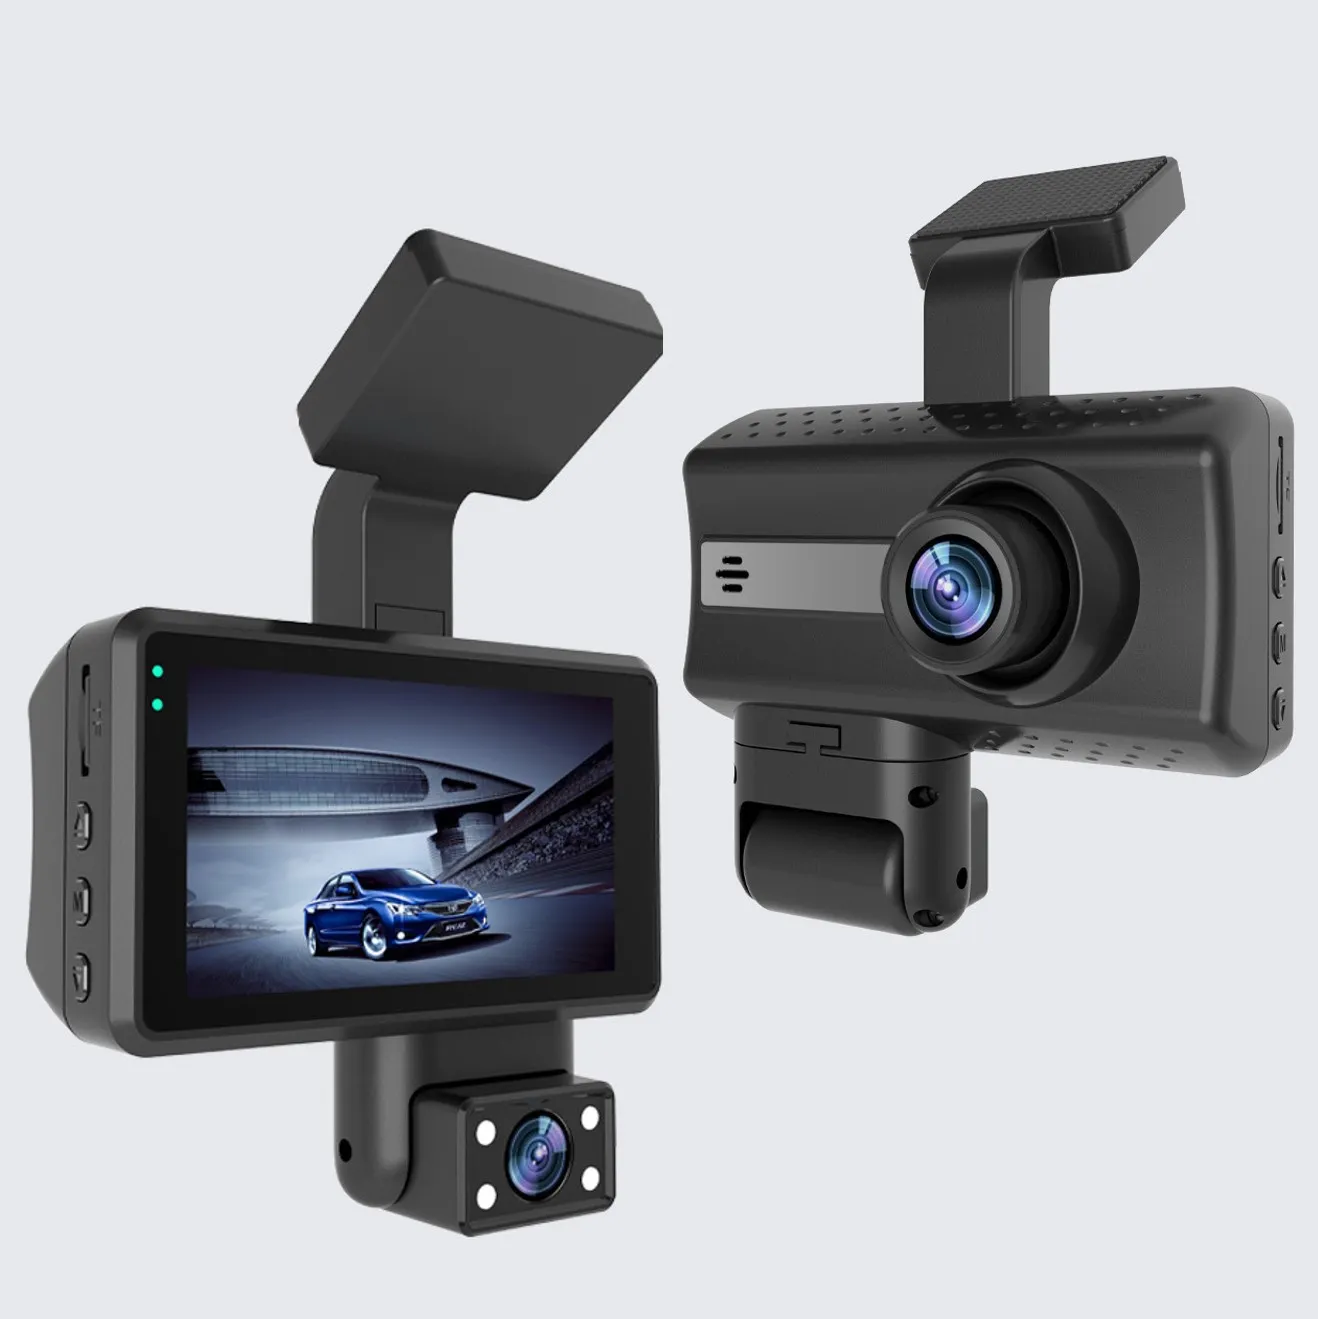 Gps 1080p Dashcam Full Hd Dvr Car Camera Driving Recorder Front And Rear Parking Monitor Vehicle Blackbox Night Vision Dash Cam